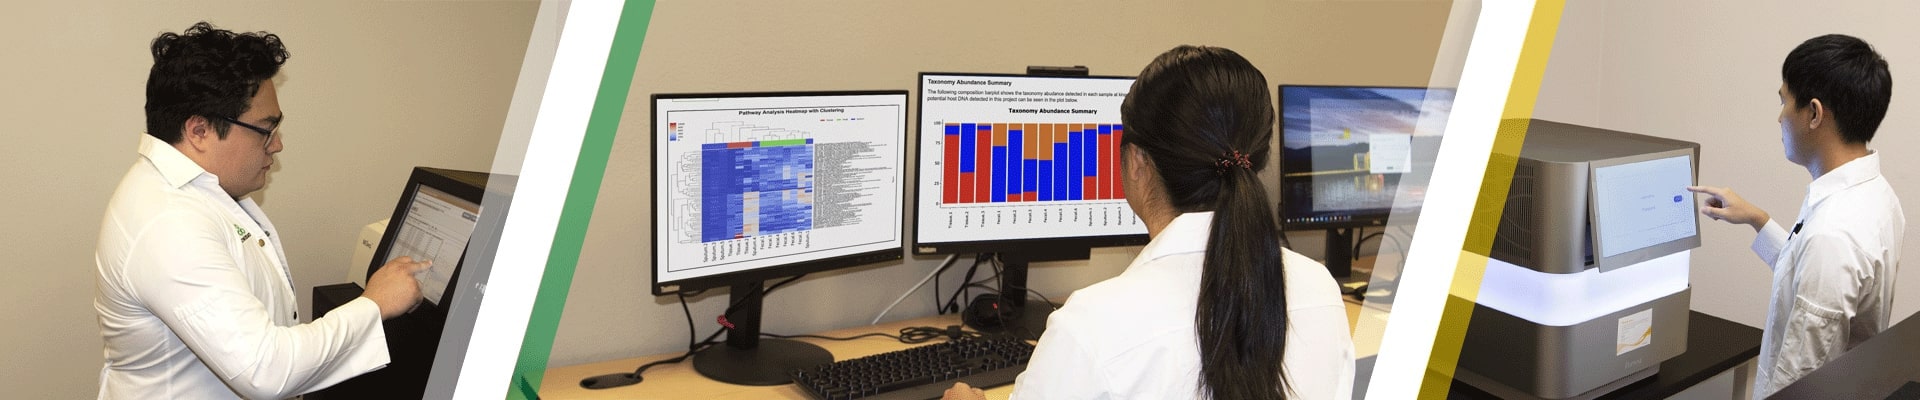 Shotgun Metagenomic Sequencing Services banner image